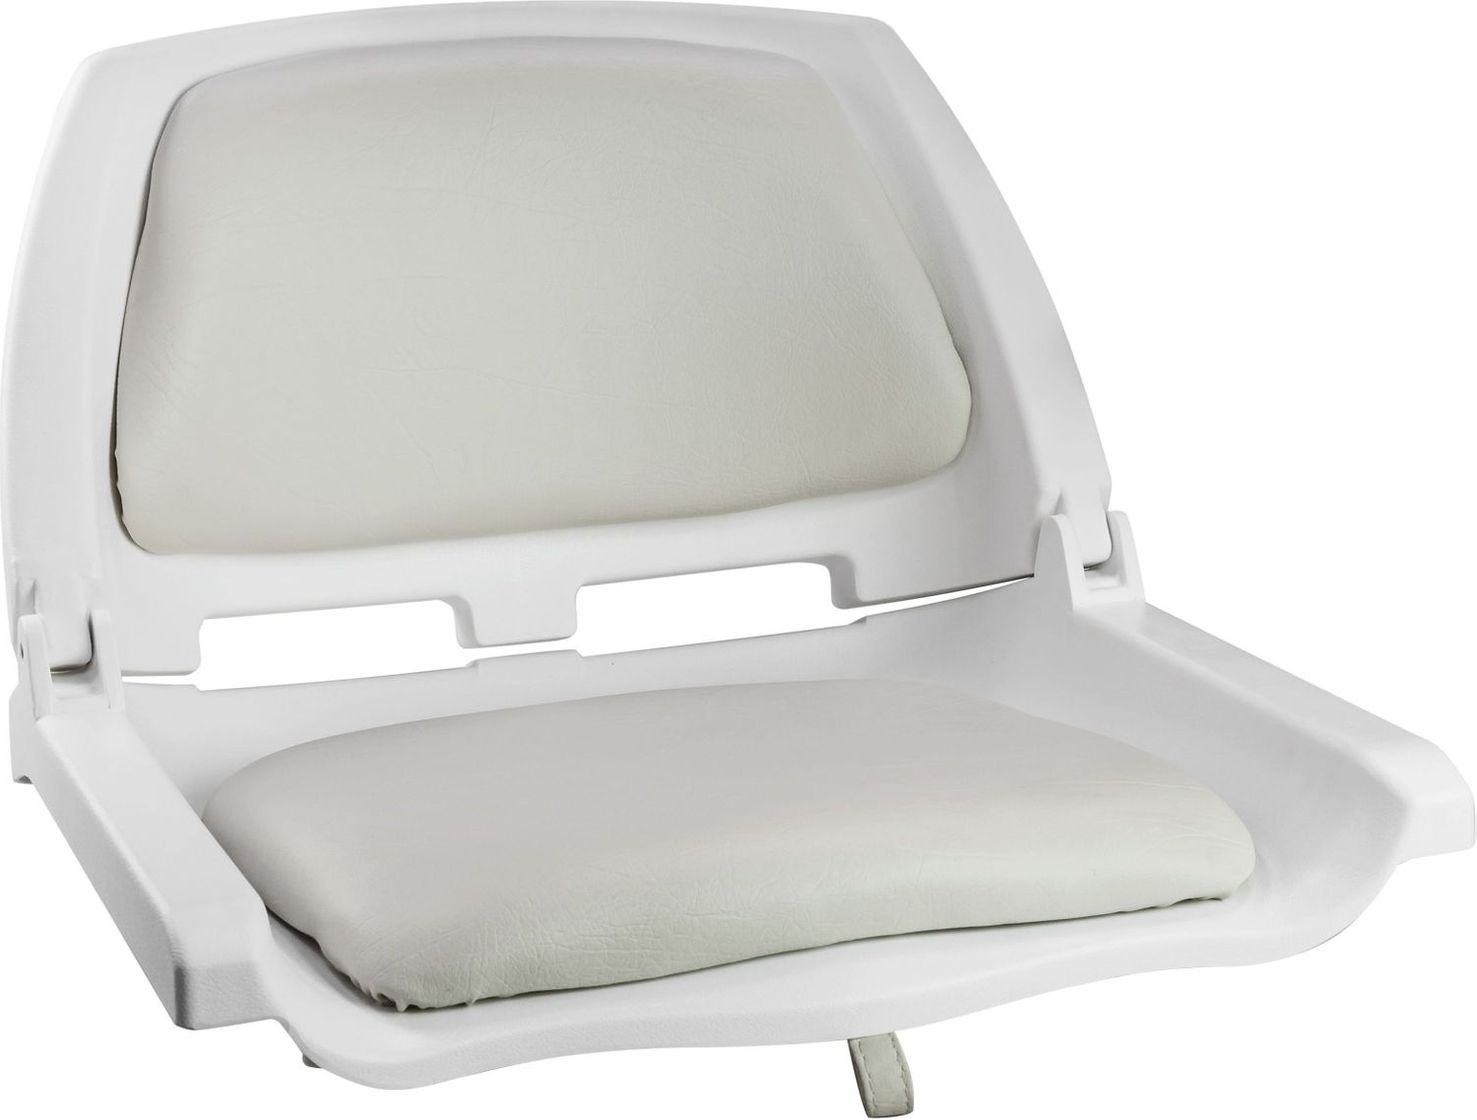 Кресло складное мягкое TRAVELER, цвет белый/серый (упаковка из 2 шт.) 1061104C_pkg_2 кресло складное мягкое traveler белый серый упаковка из 2 шт 1061104c pkg 2